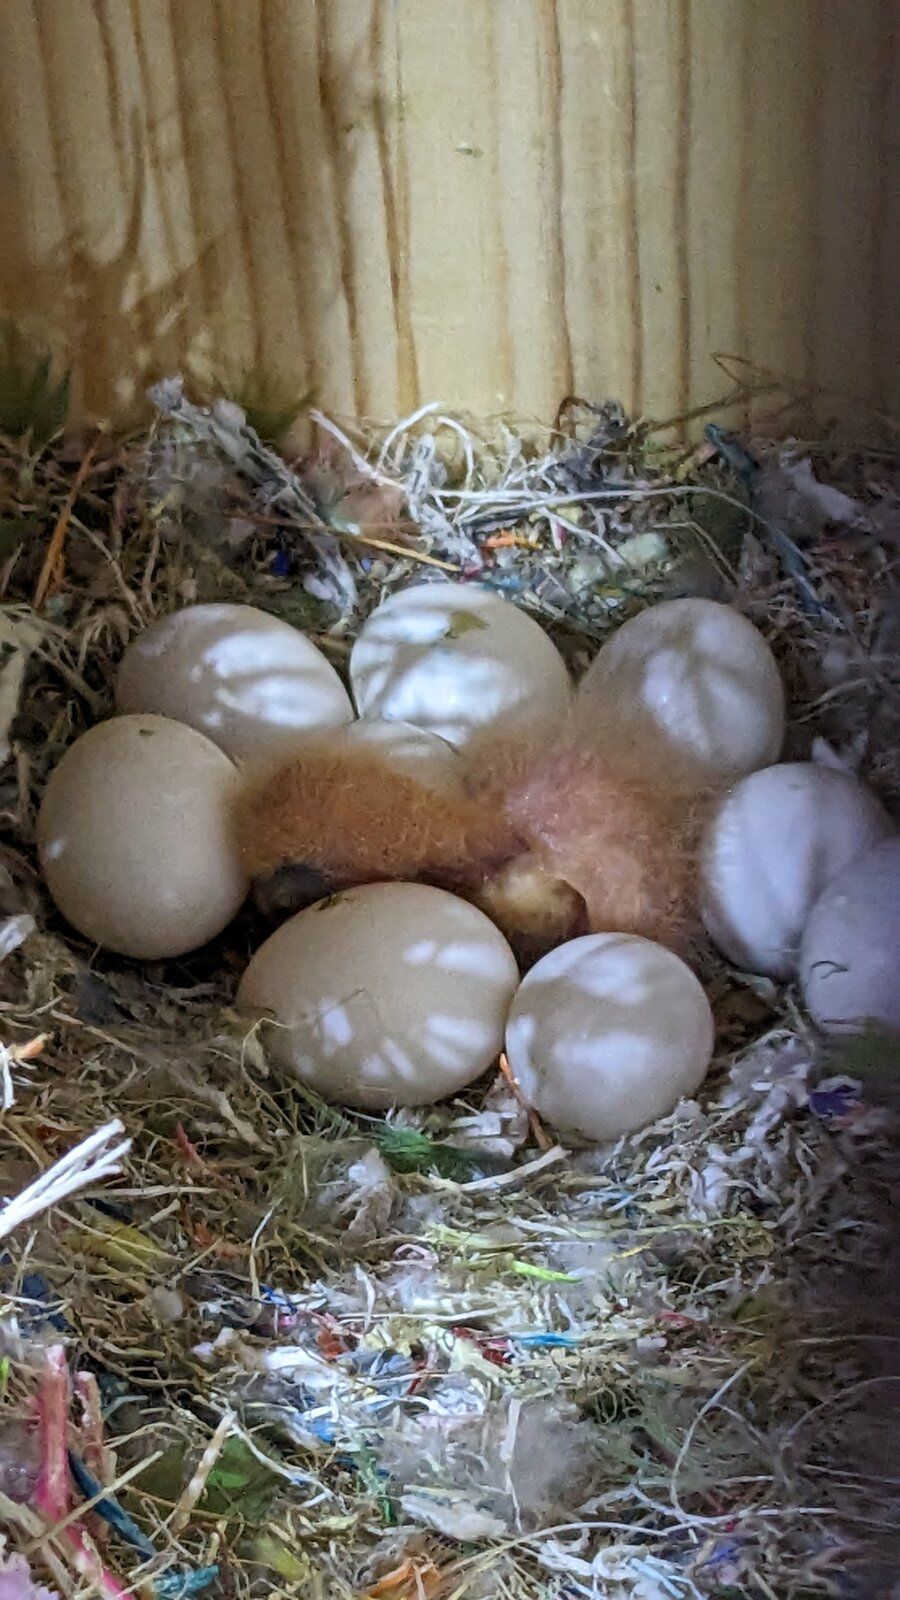 Phoenix newest baby 1 of 10 eggs